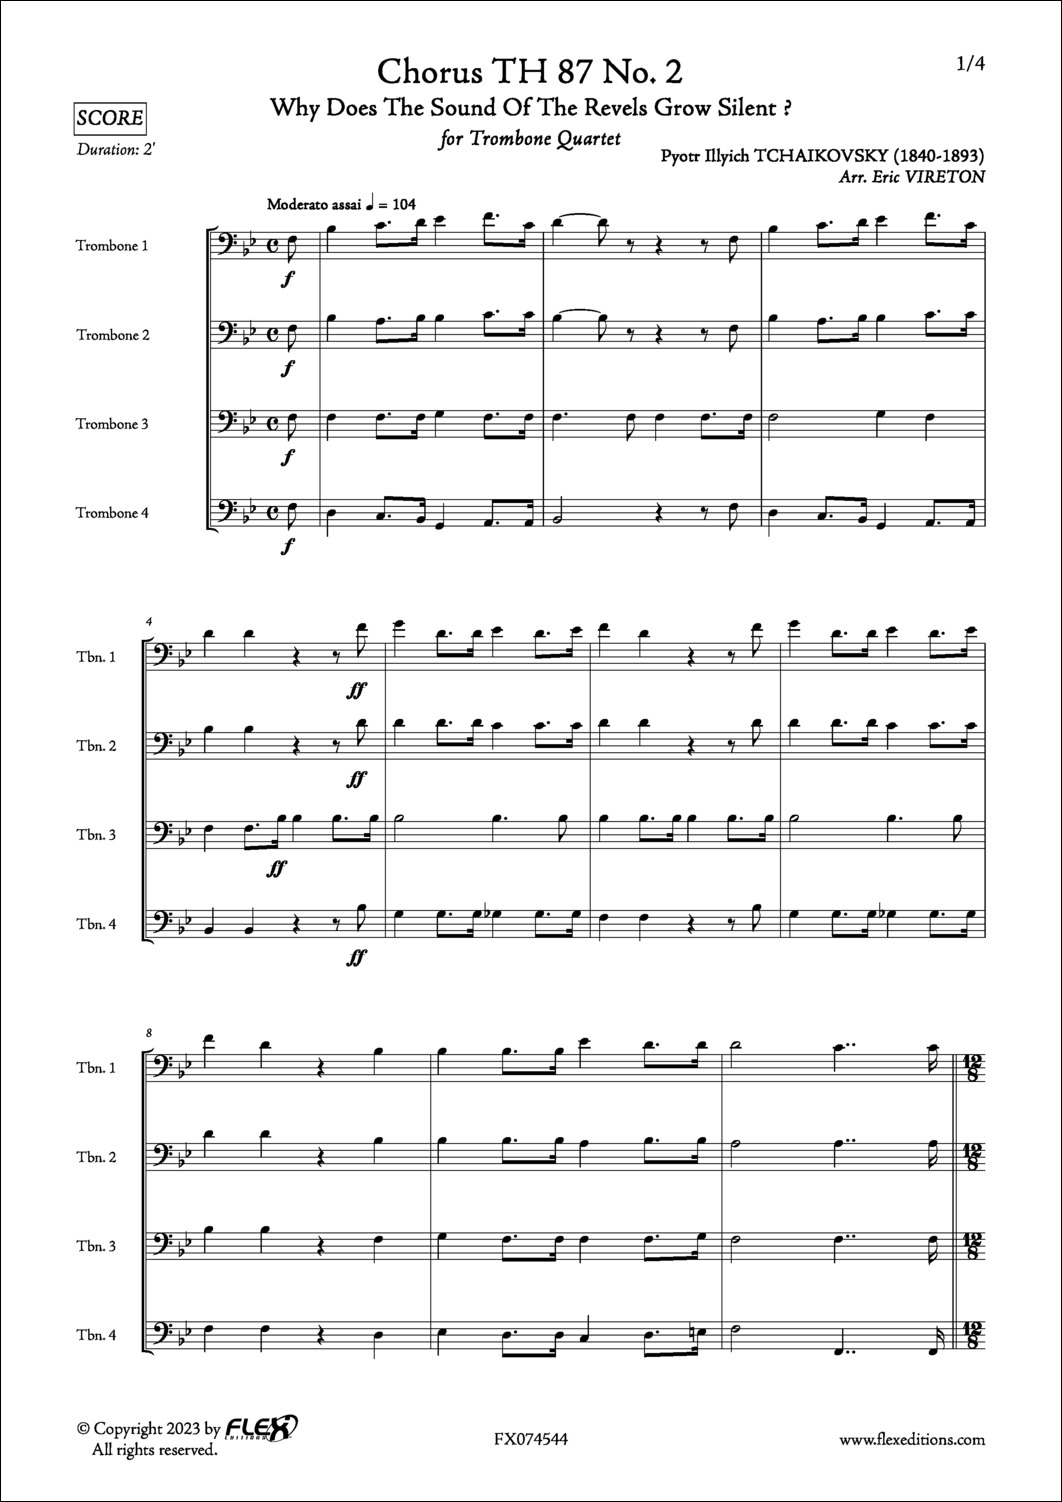 Choeur TH 87 No. 2 - P. I. TCHAIKOVSKY - <font color=#666666>Quatuor de Trombones</font>